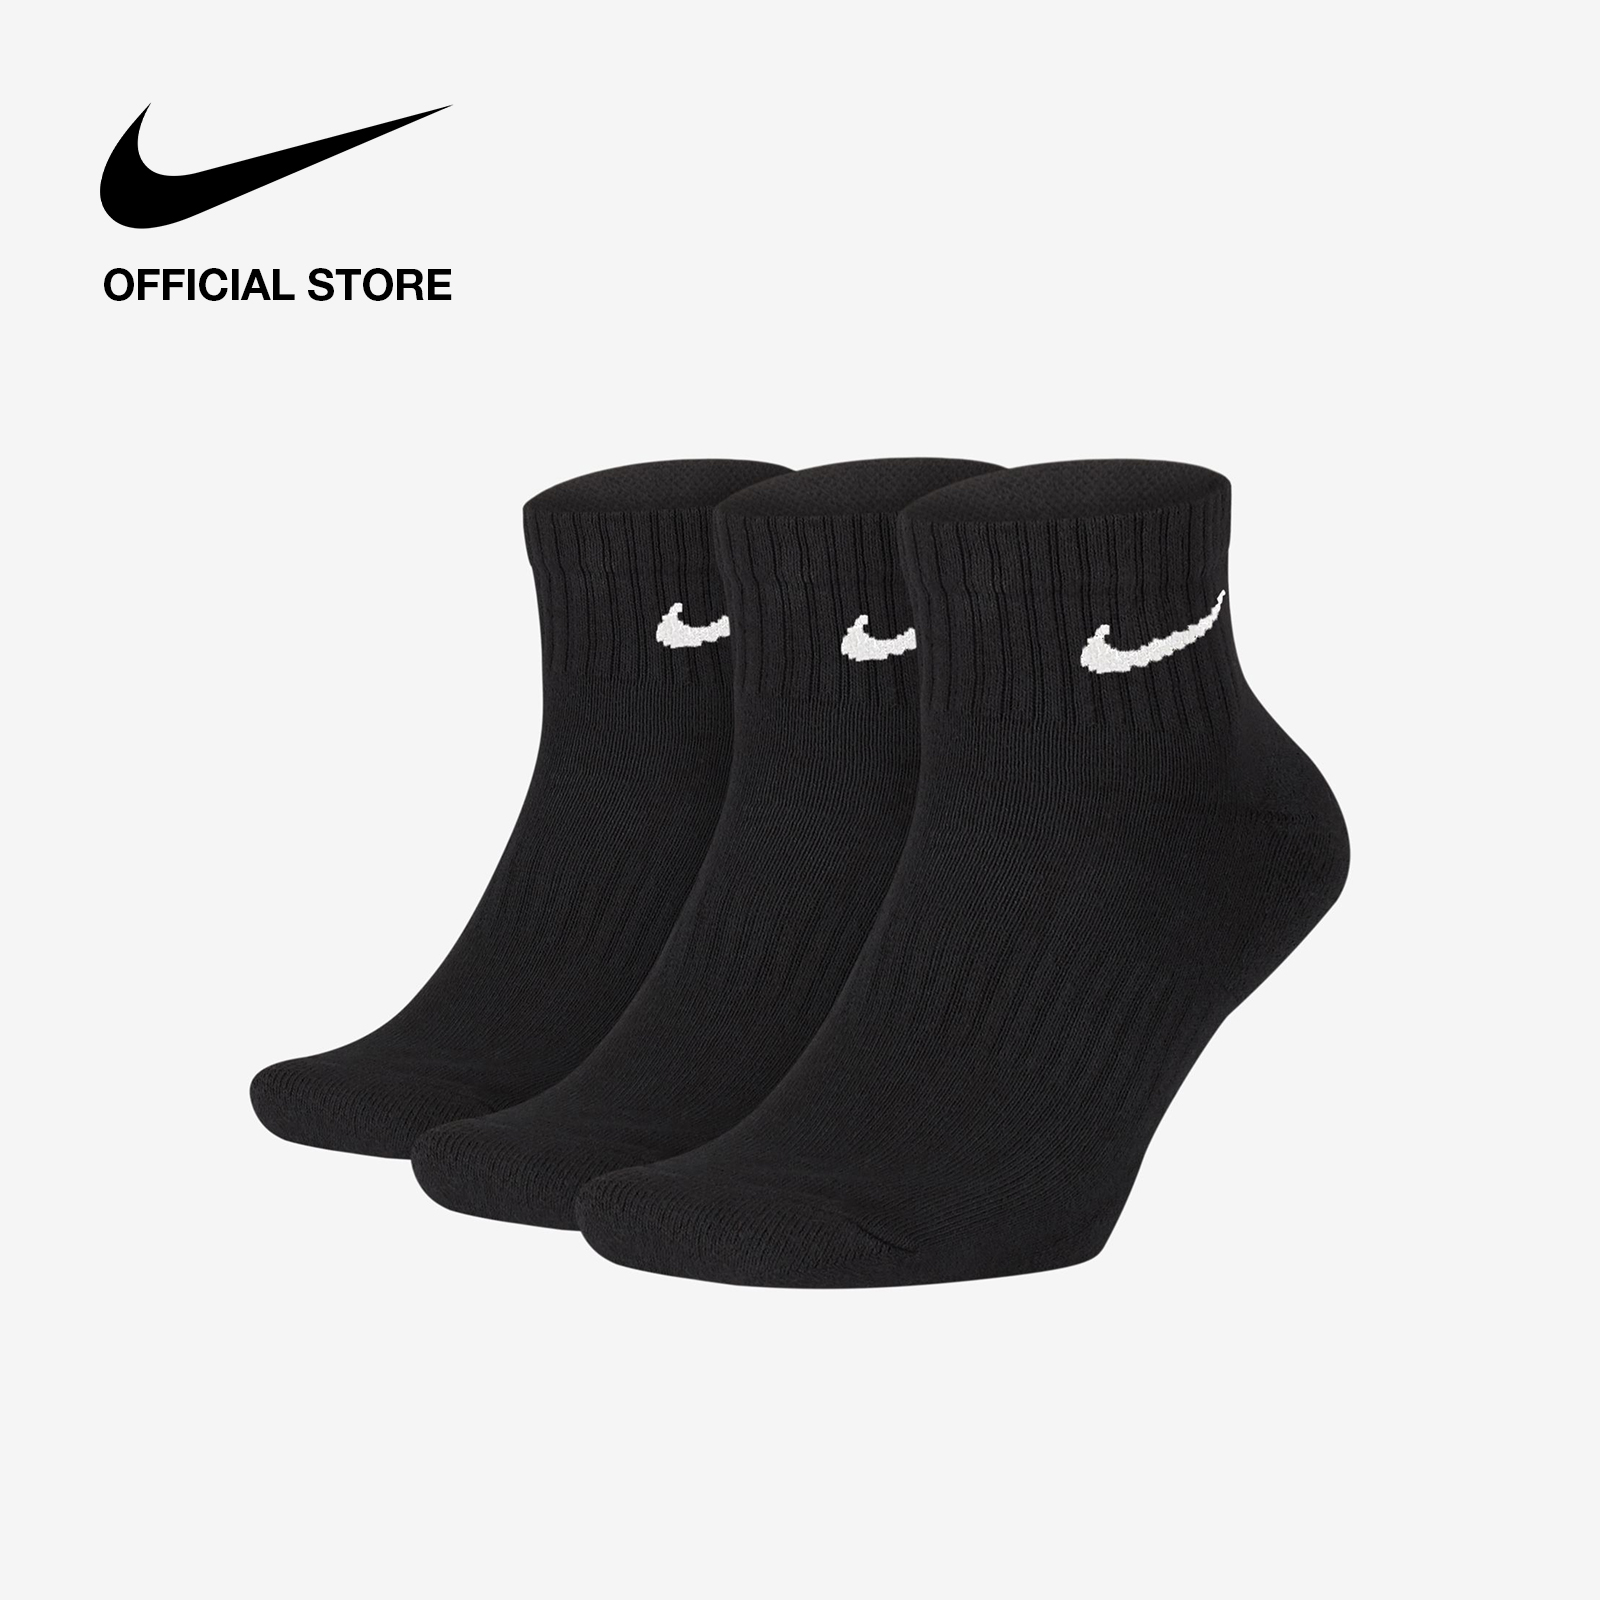 Men's plain black cotton ankle socks